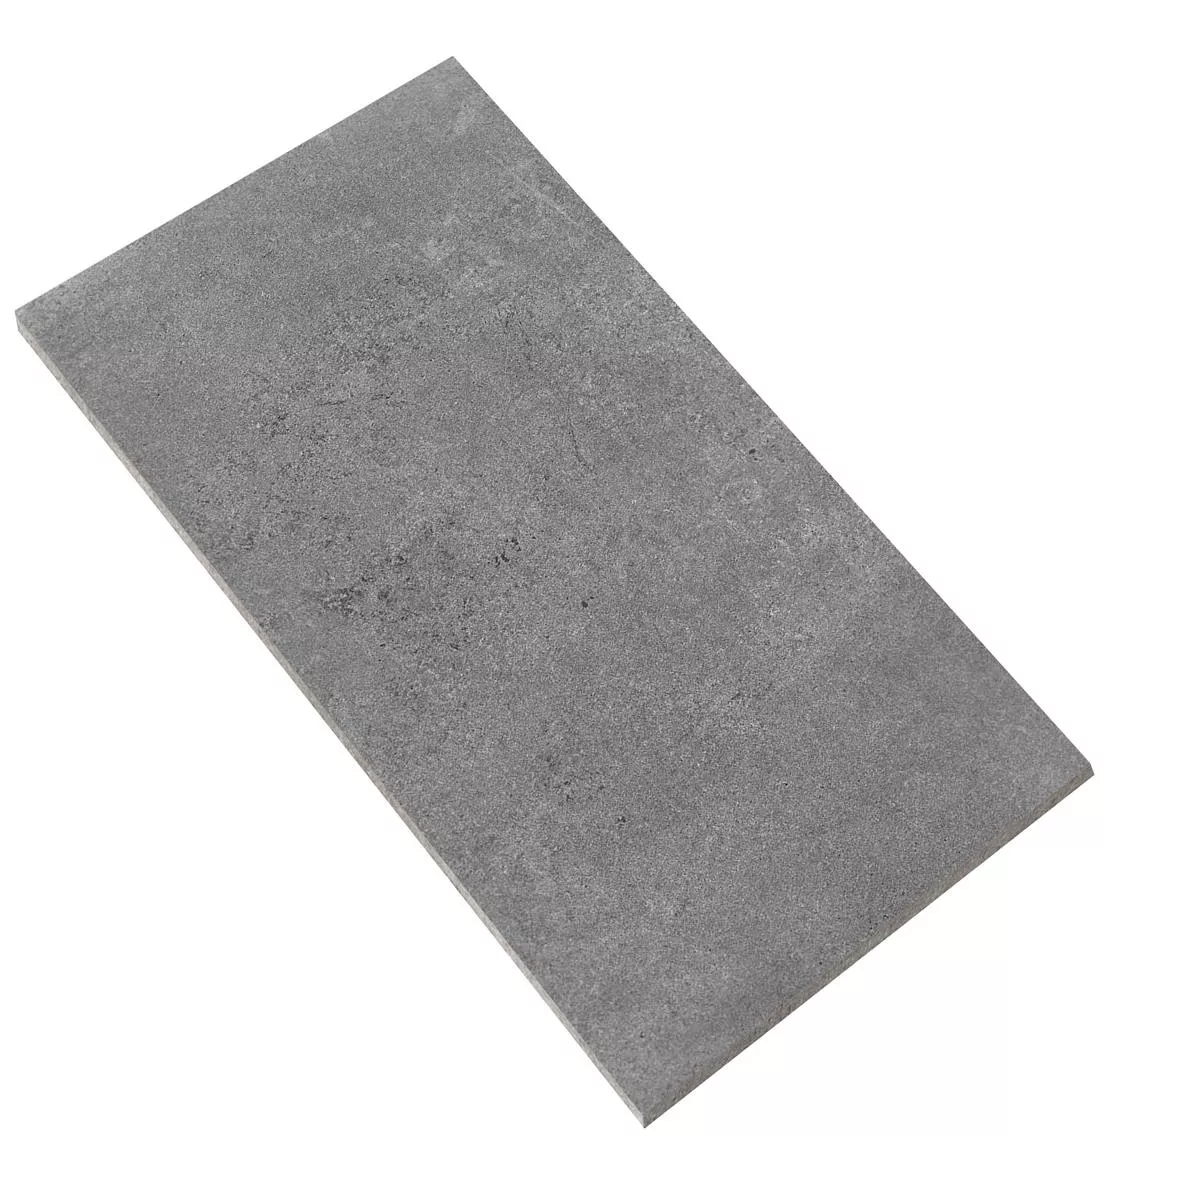 Sample Floor Tiles Colossus Anthracite 30x60cm